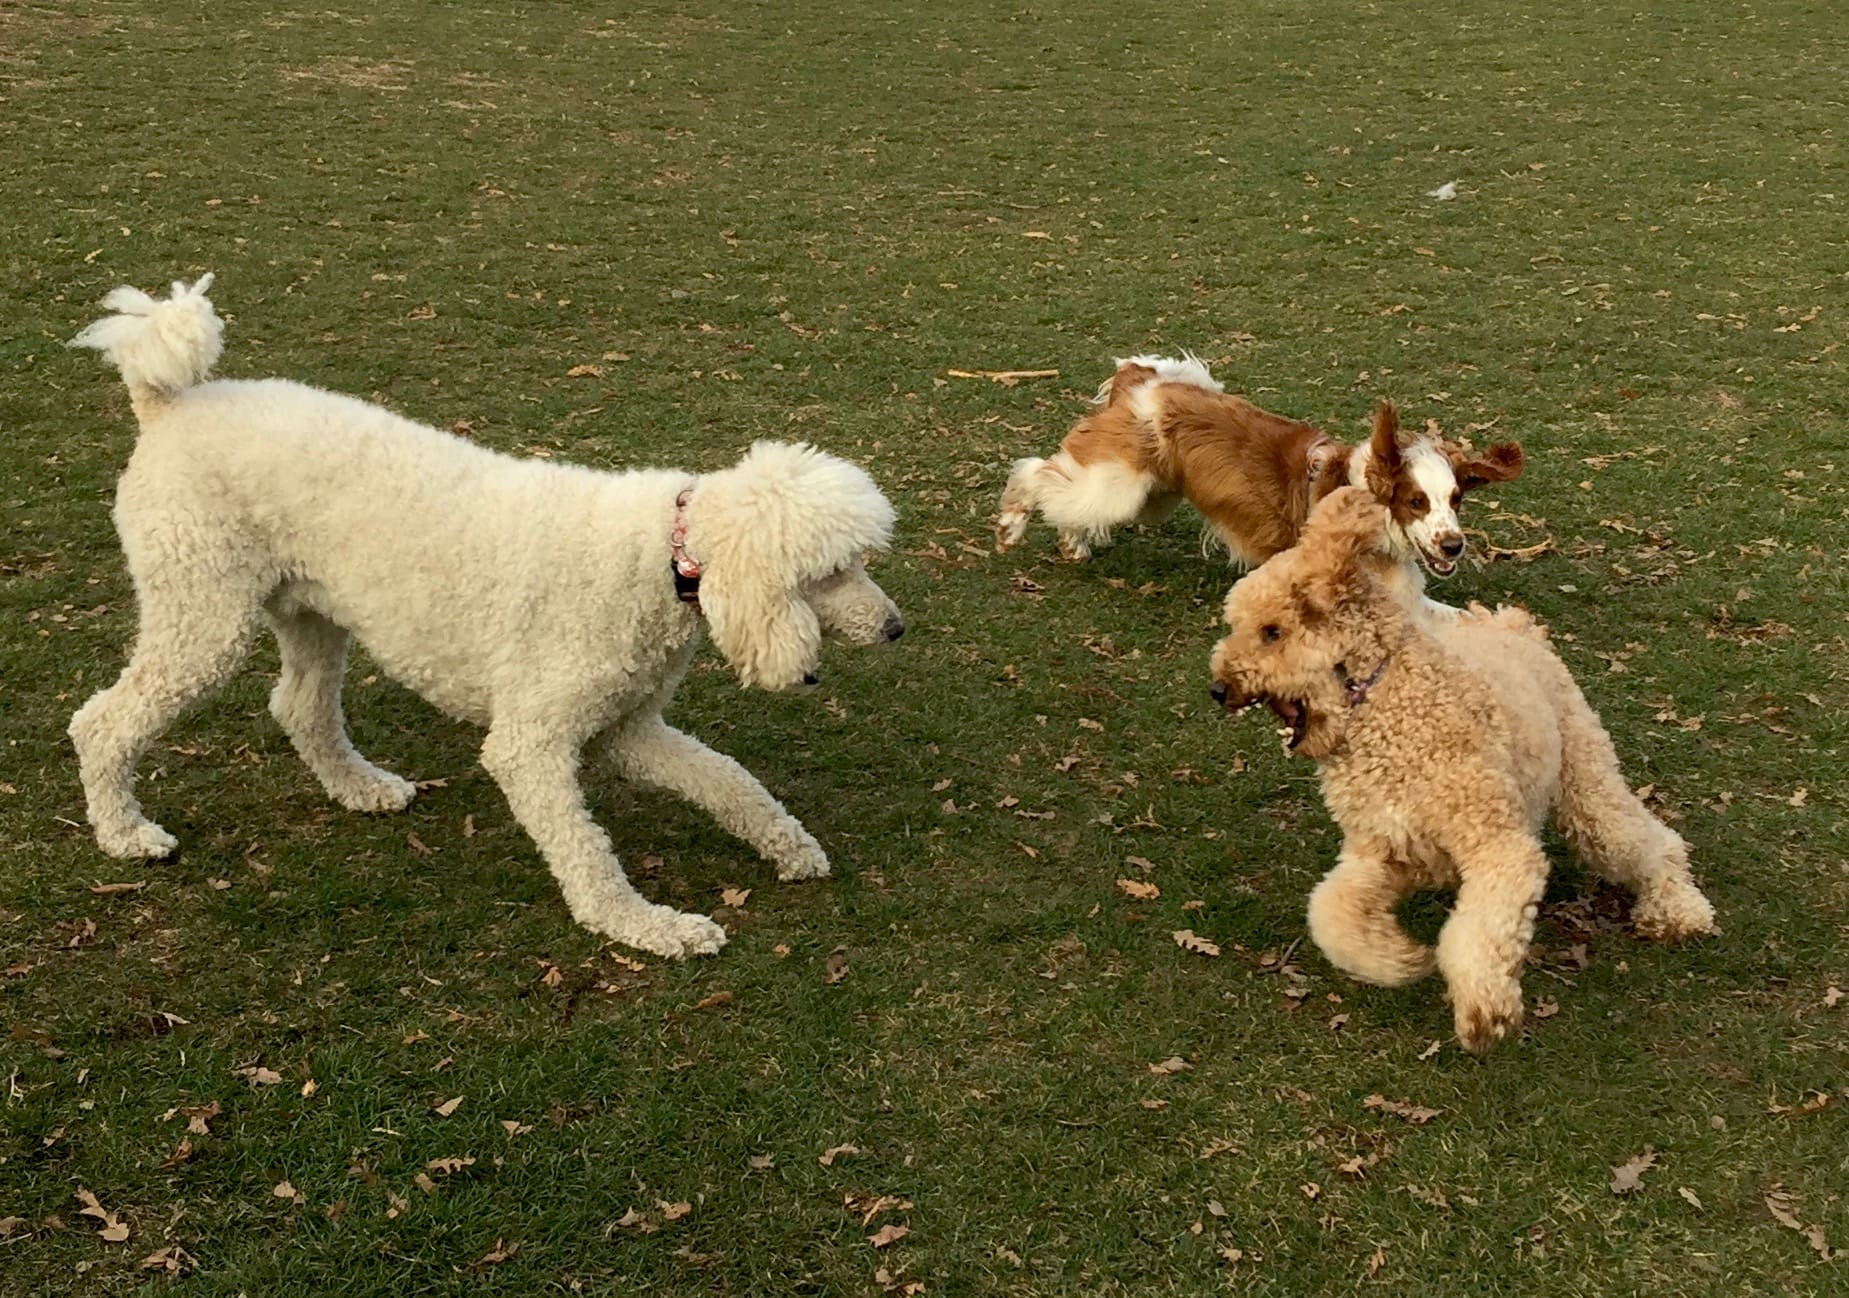 Dog playtime in Prospect Park